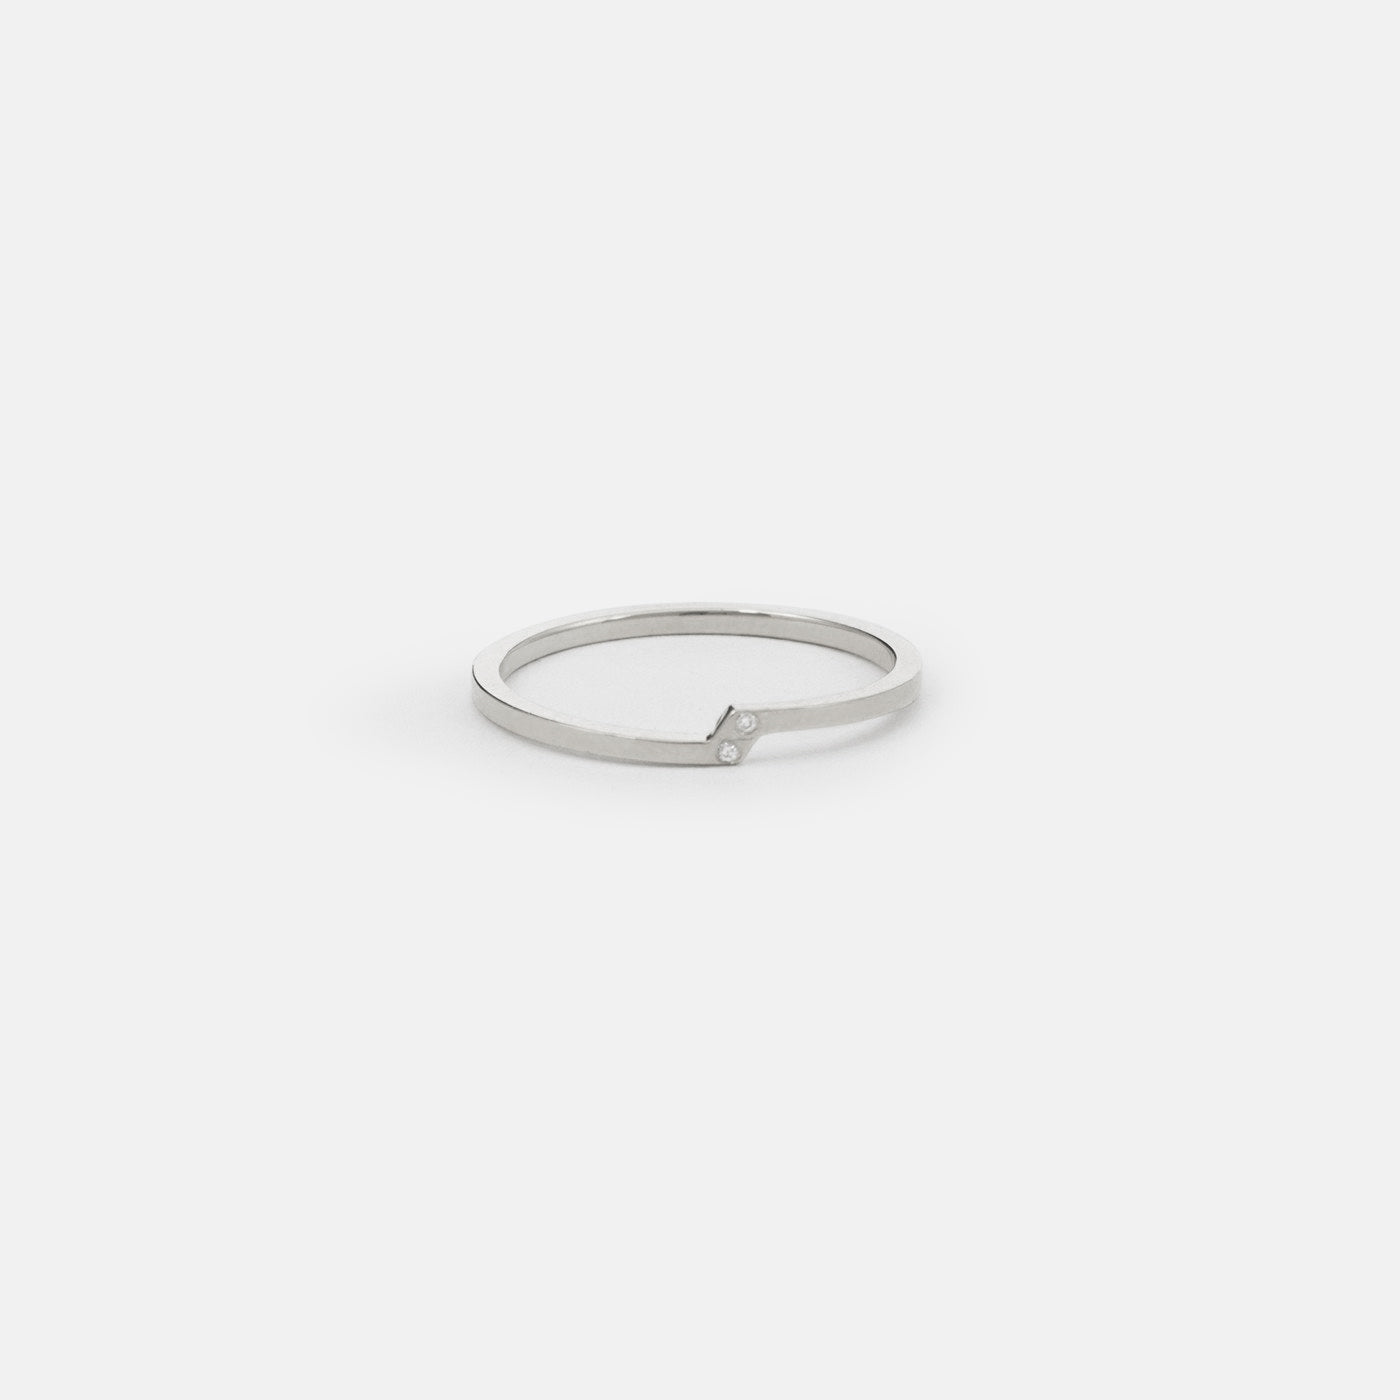 Rili Designer Ring in 14k White Gold set with White Diamonds By SHW Fine Jewelry NYC